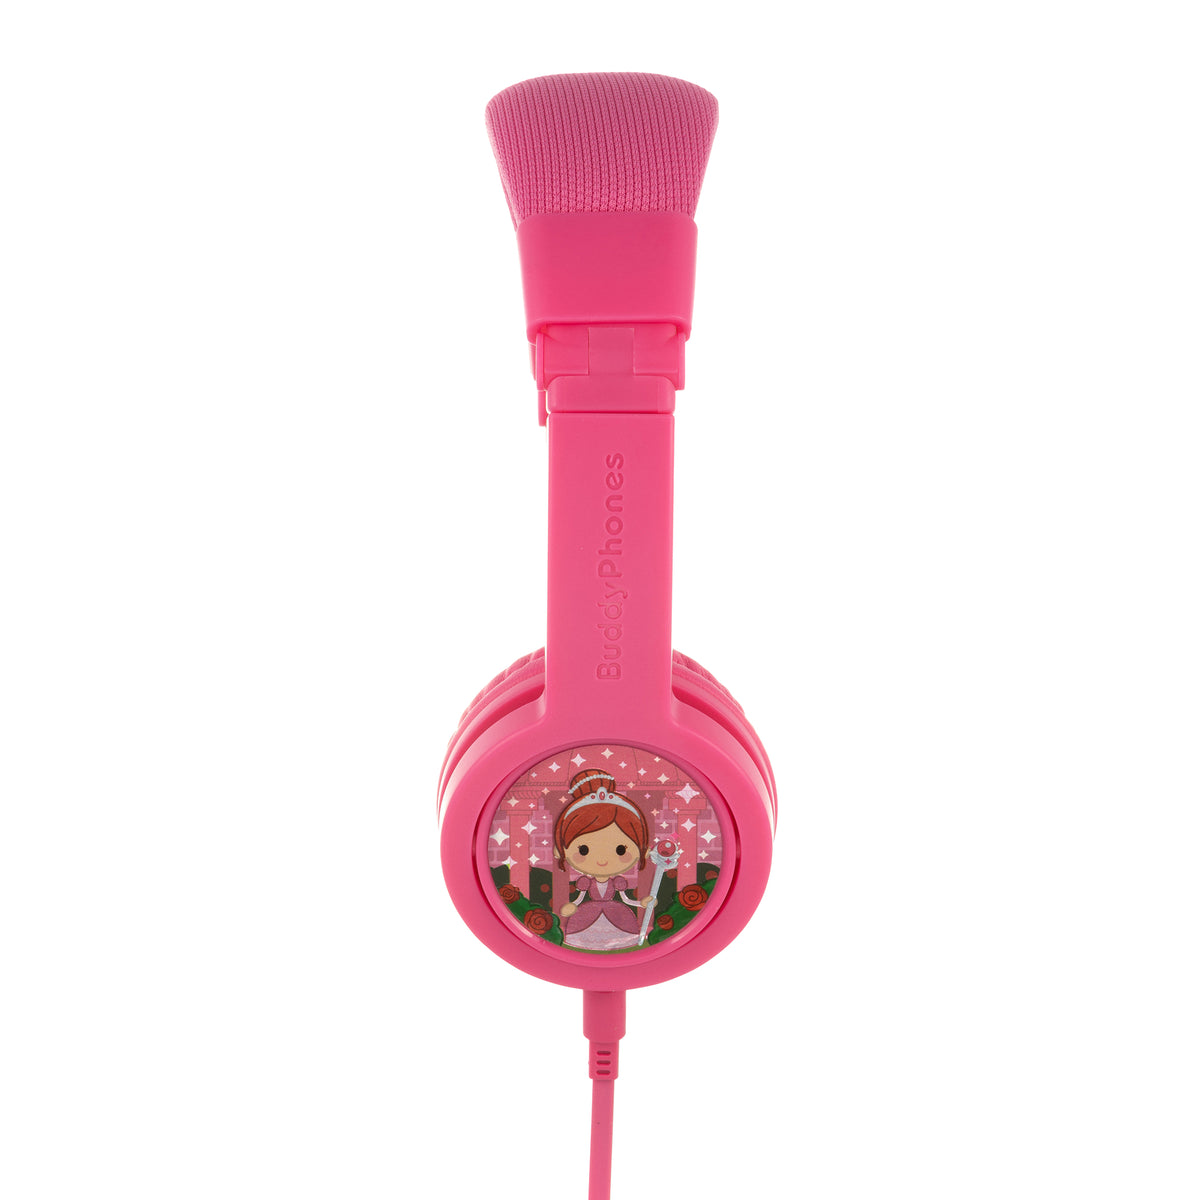 BUDDYPHONES Explore Plus Foldable Headphones with Mic - Rose Pink